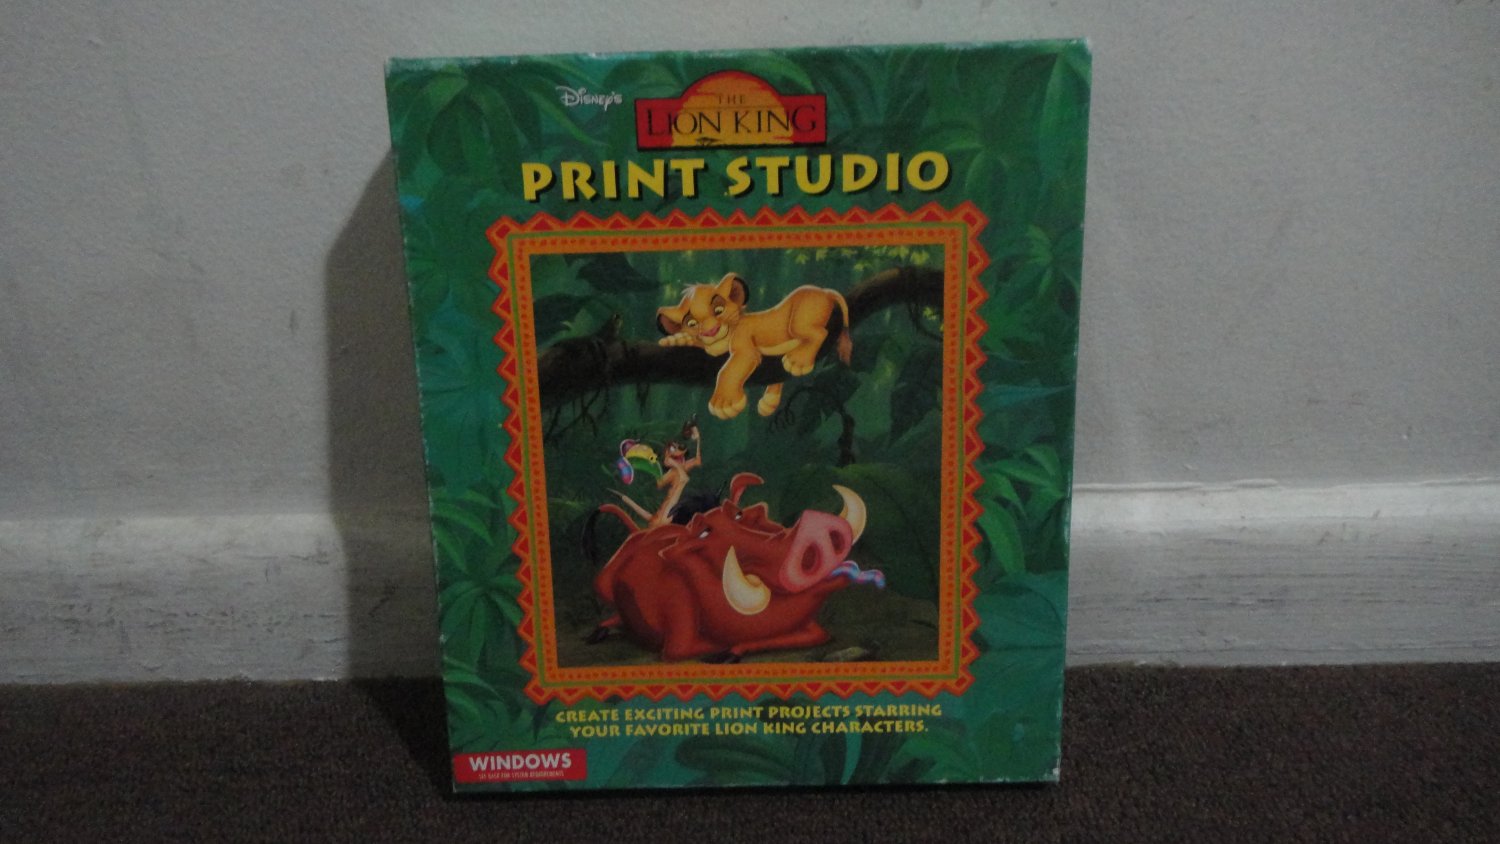 DISNEY'S The Lion King Print Studio Windows 3.1. 3.5" HD, in big retail box. LOOK!